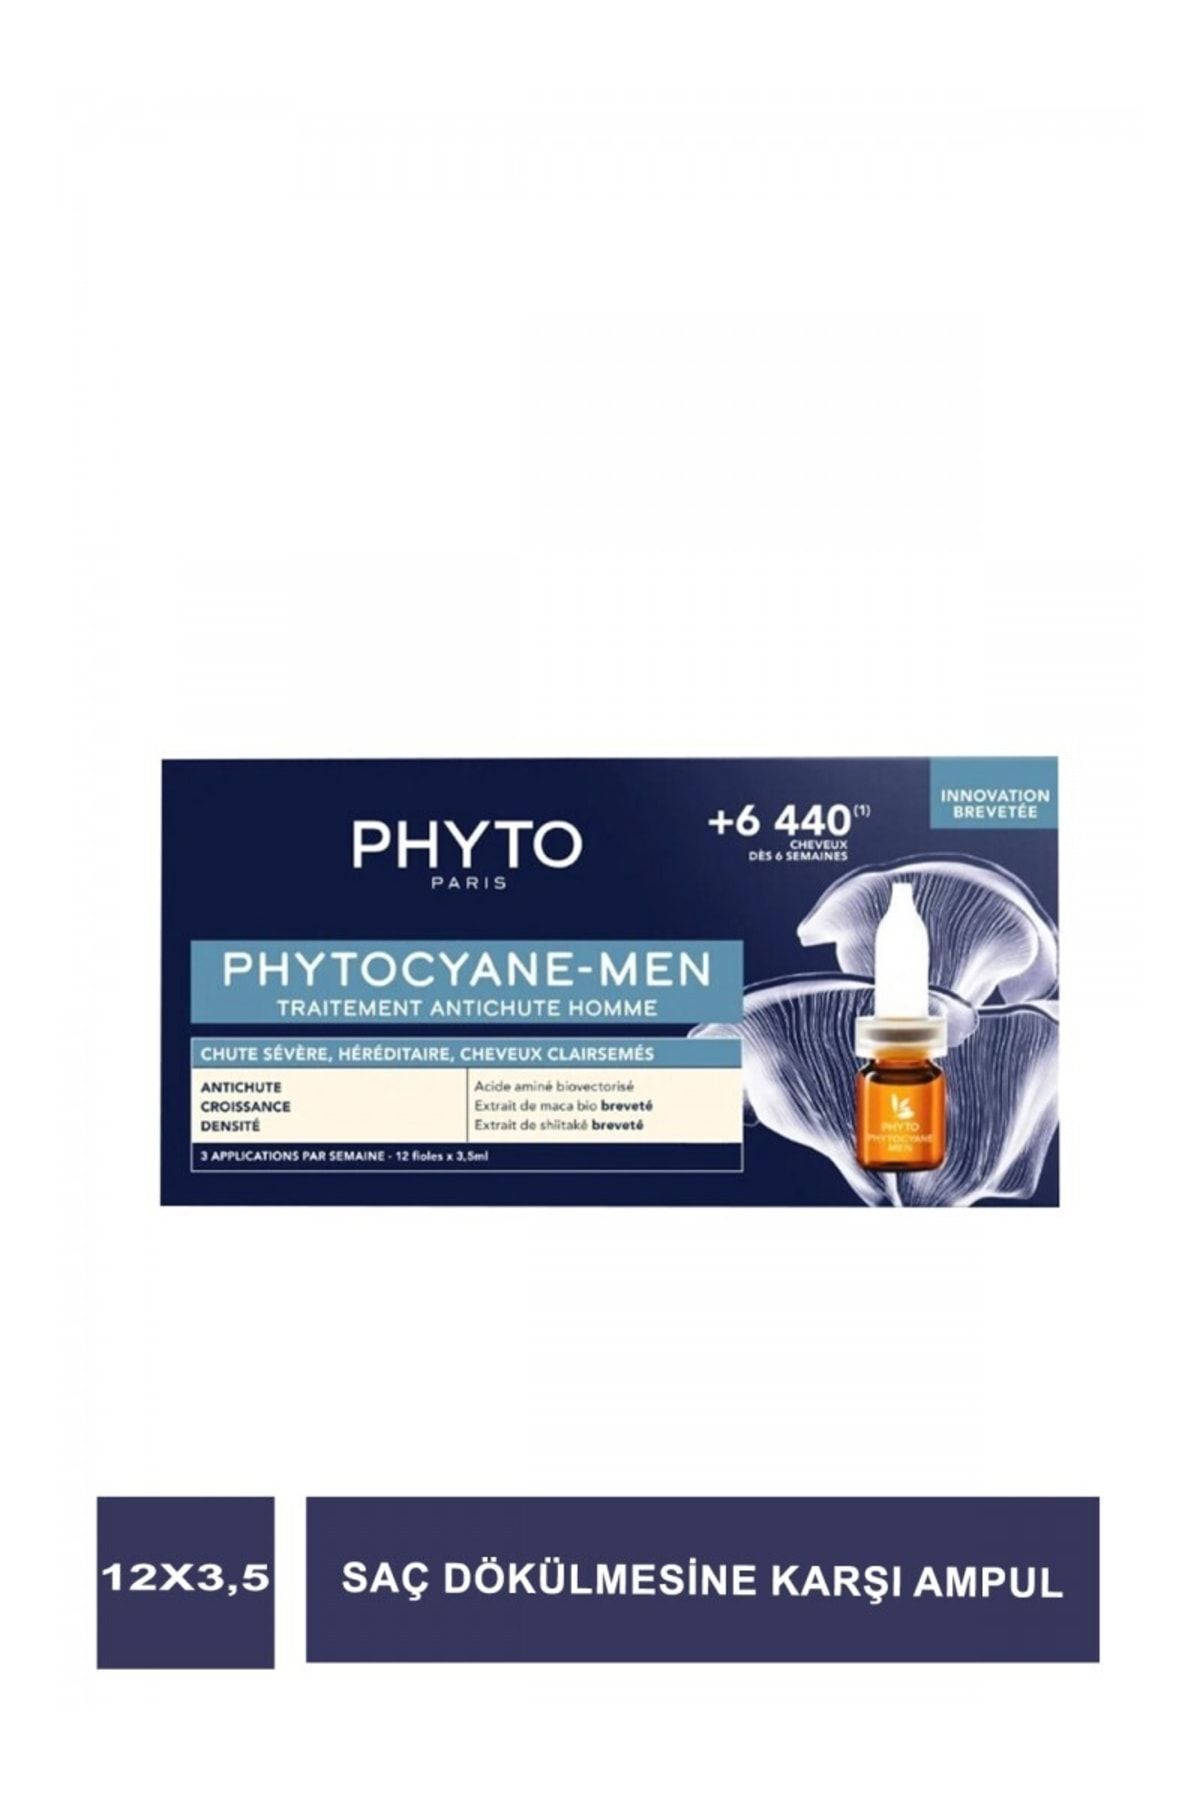 Phyto Cyane Erkek Tipi Saç Dökülme Karşıtı 12 x 3,5 ml Ampul